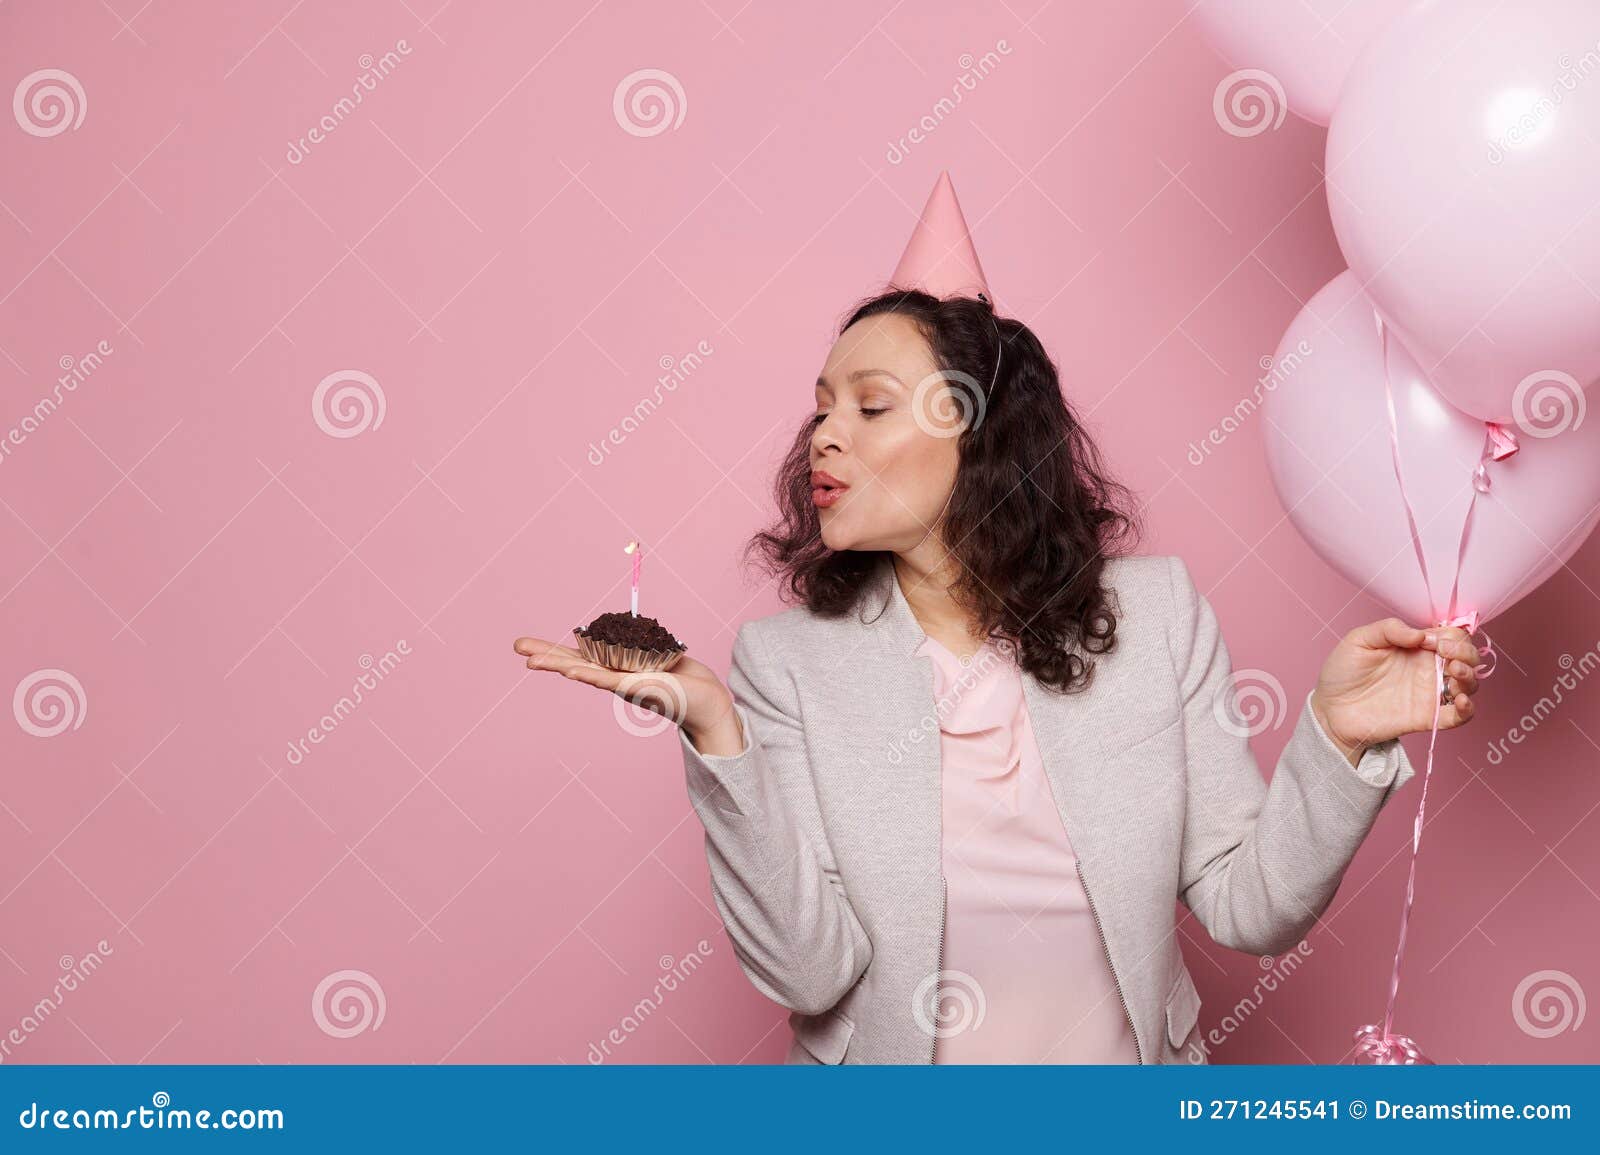 Birthday Girl Poses Front Balloon Decoration Stock Photo 2265325597 |  Shutterstock